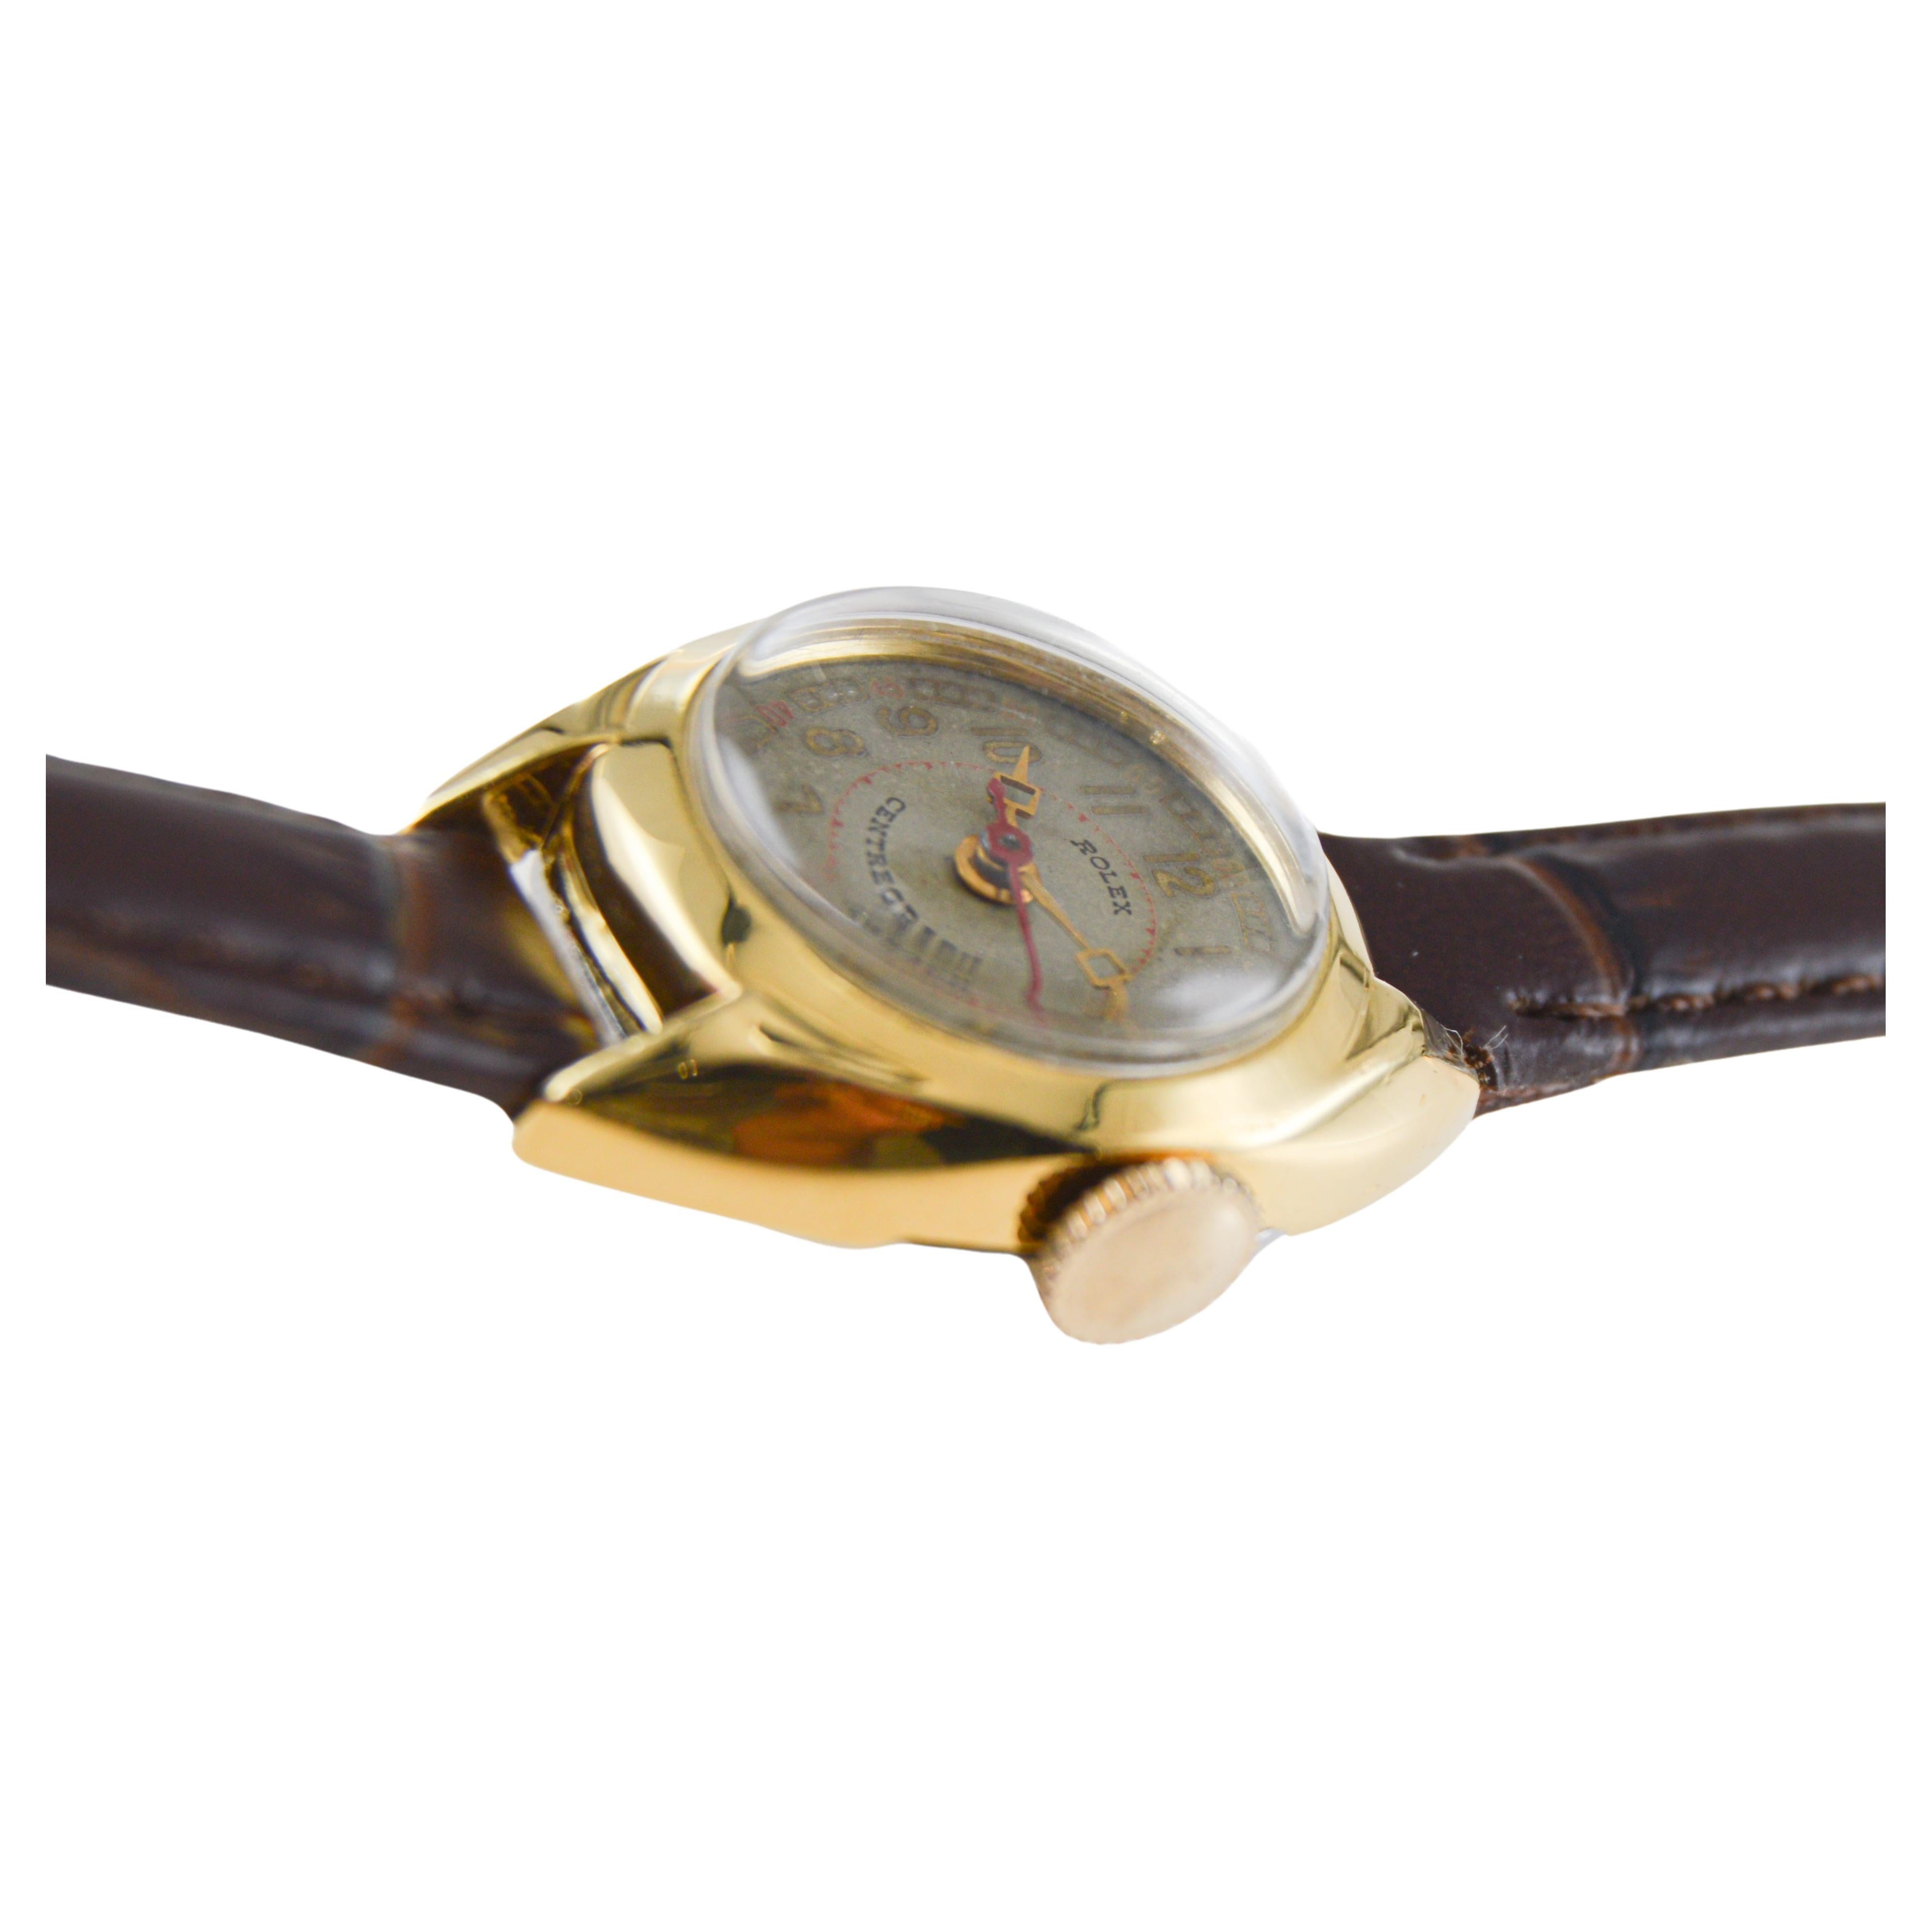 Rolex Centregraph Gold Filled Ladies Wrist Watch circa, 1940's 7